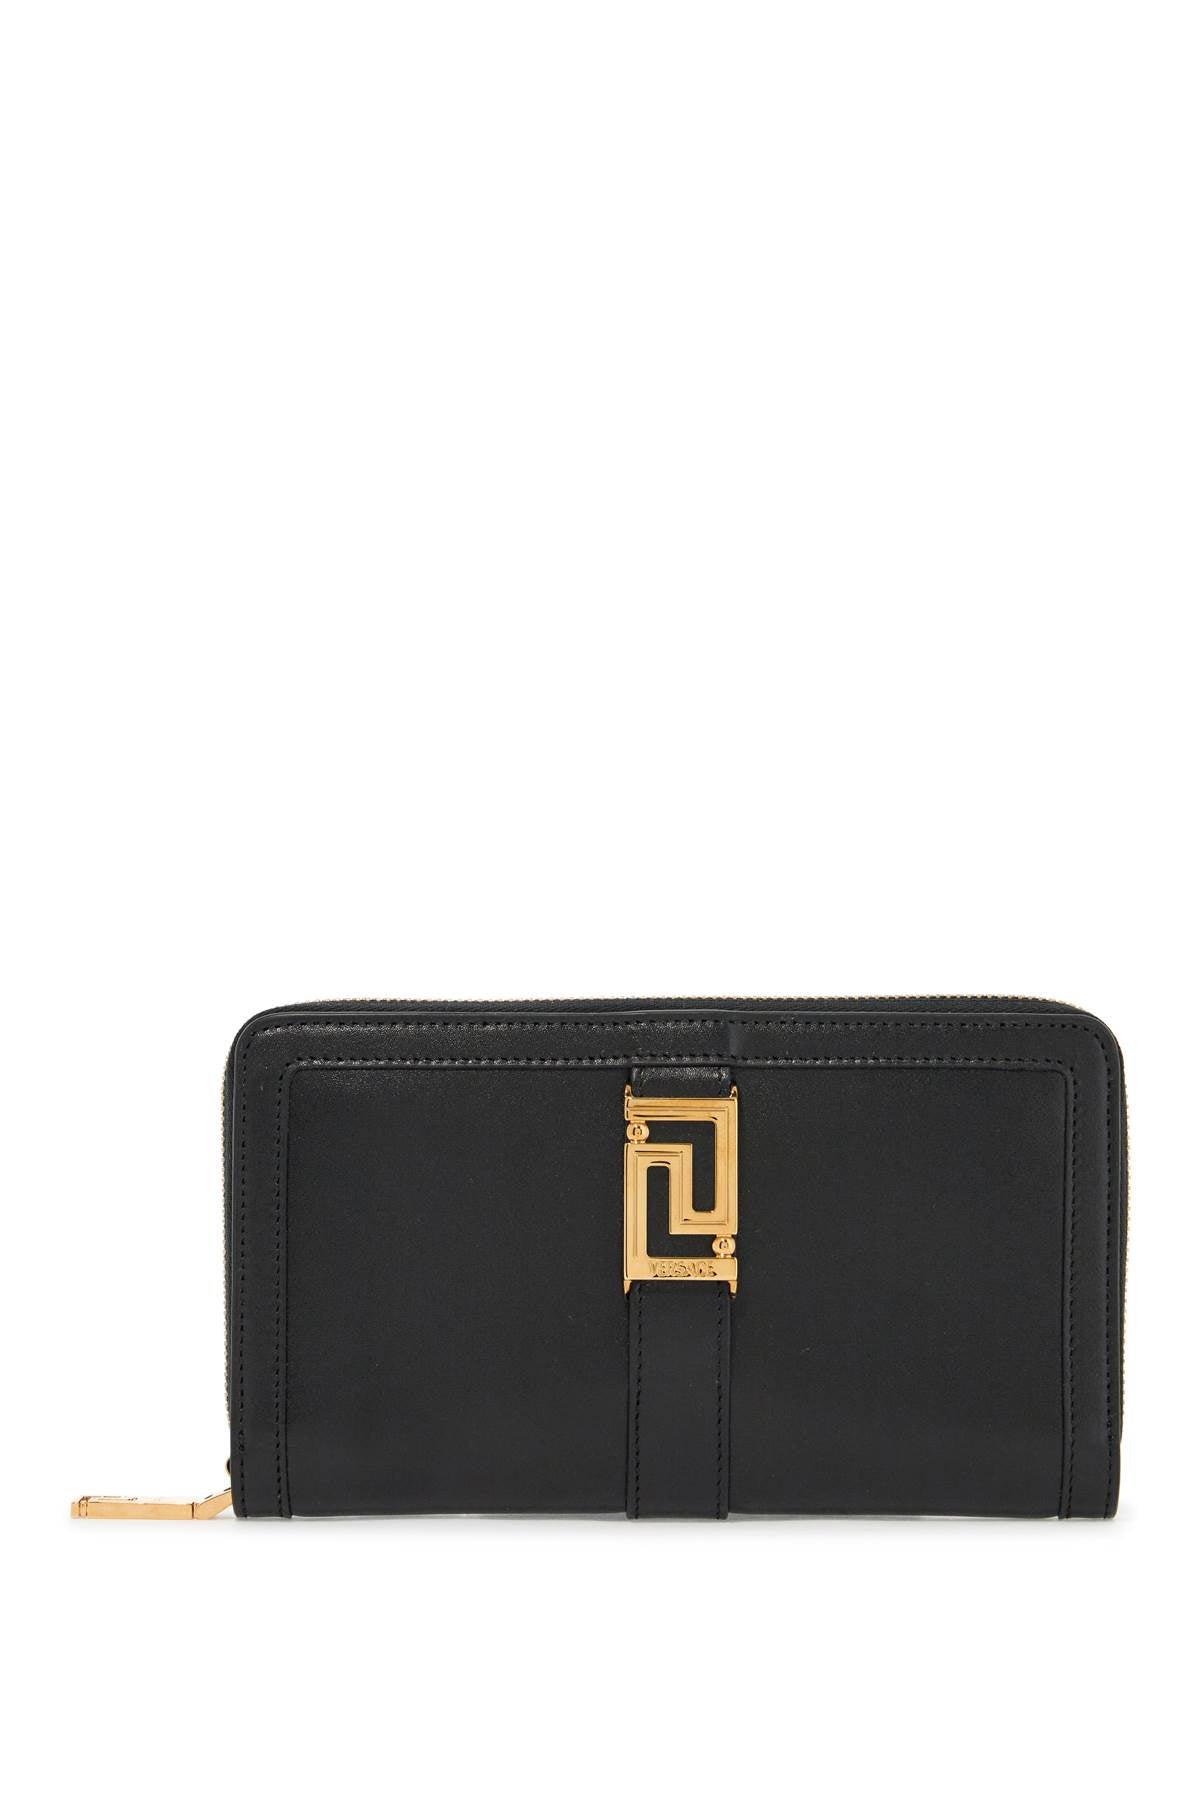 Versace wallet - Black